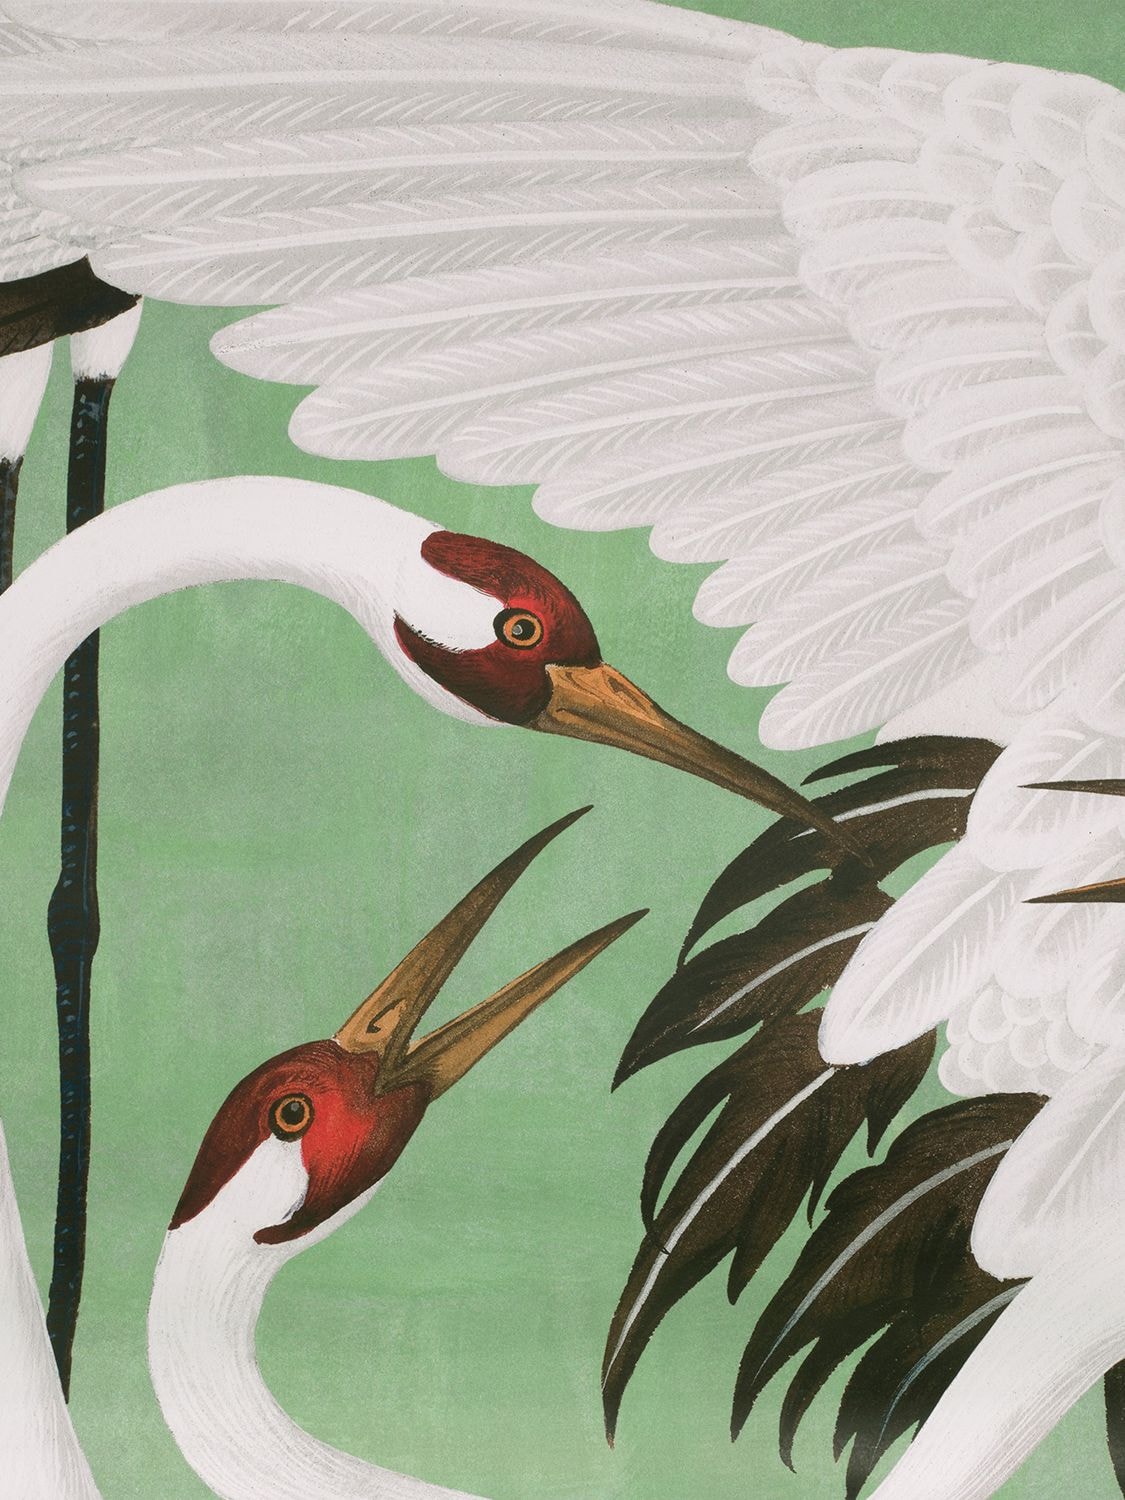 Gucci Heron Printed Wallpaper Panels In Green Print